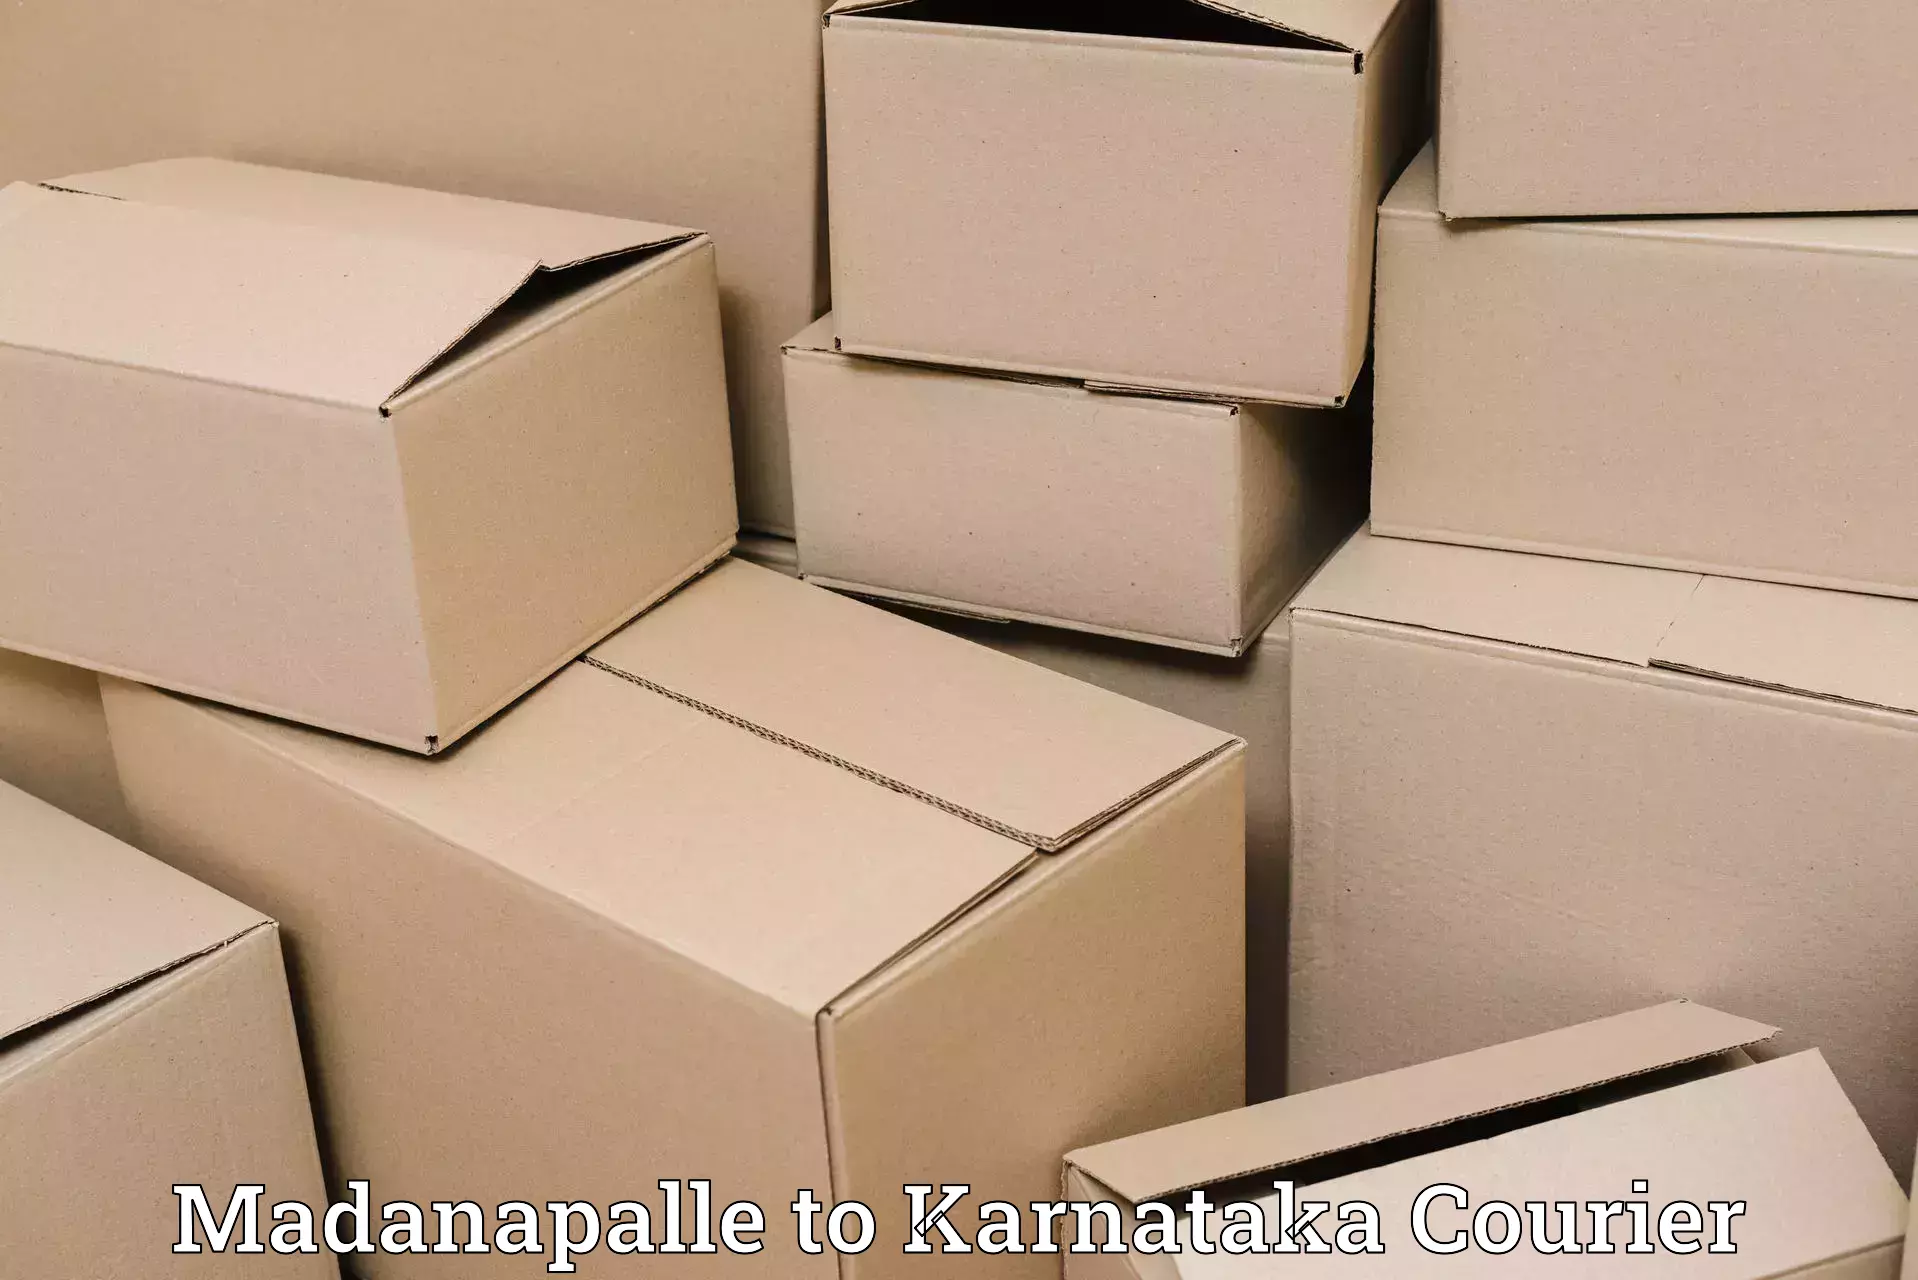 Digital courier platforms Madanapalle to Karnataka